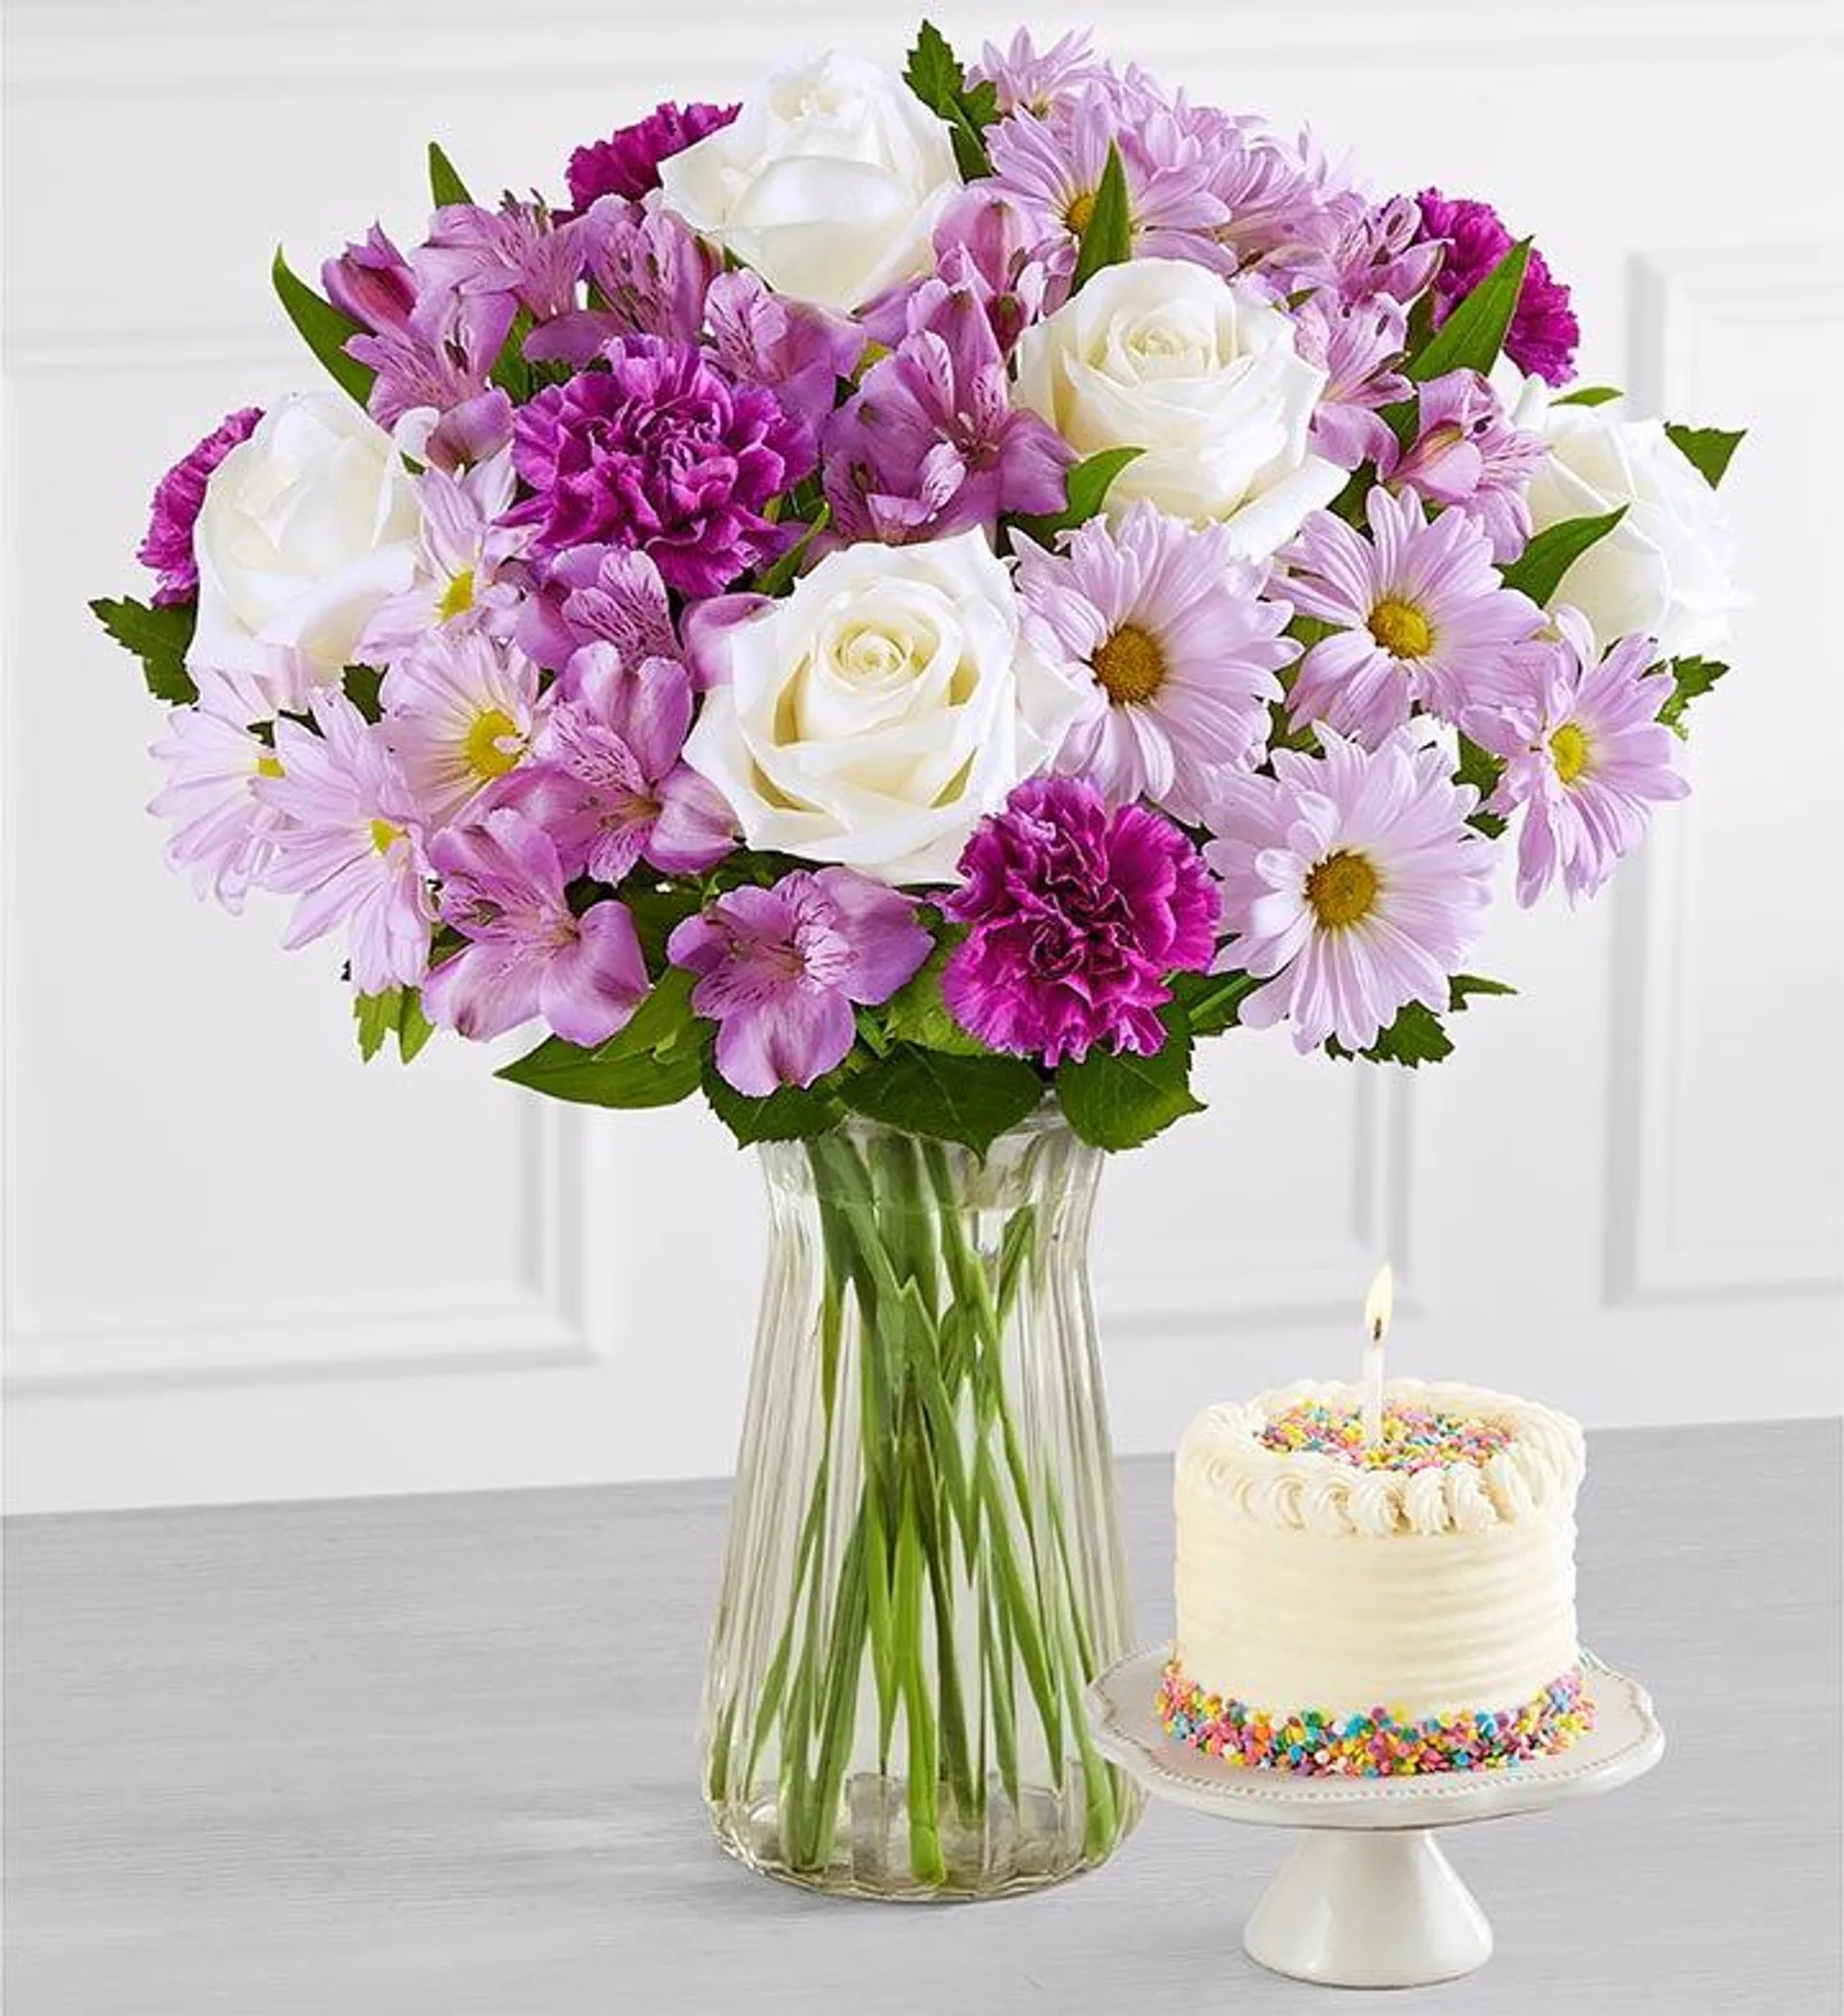 Deliciously Decadent ™ Lavender Garden & Time to Celebrate Birthday Cake ™